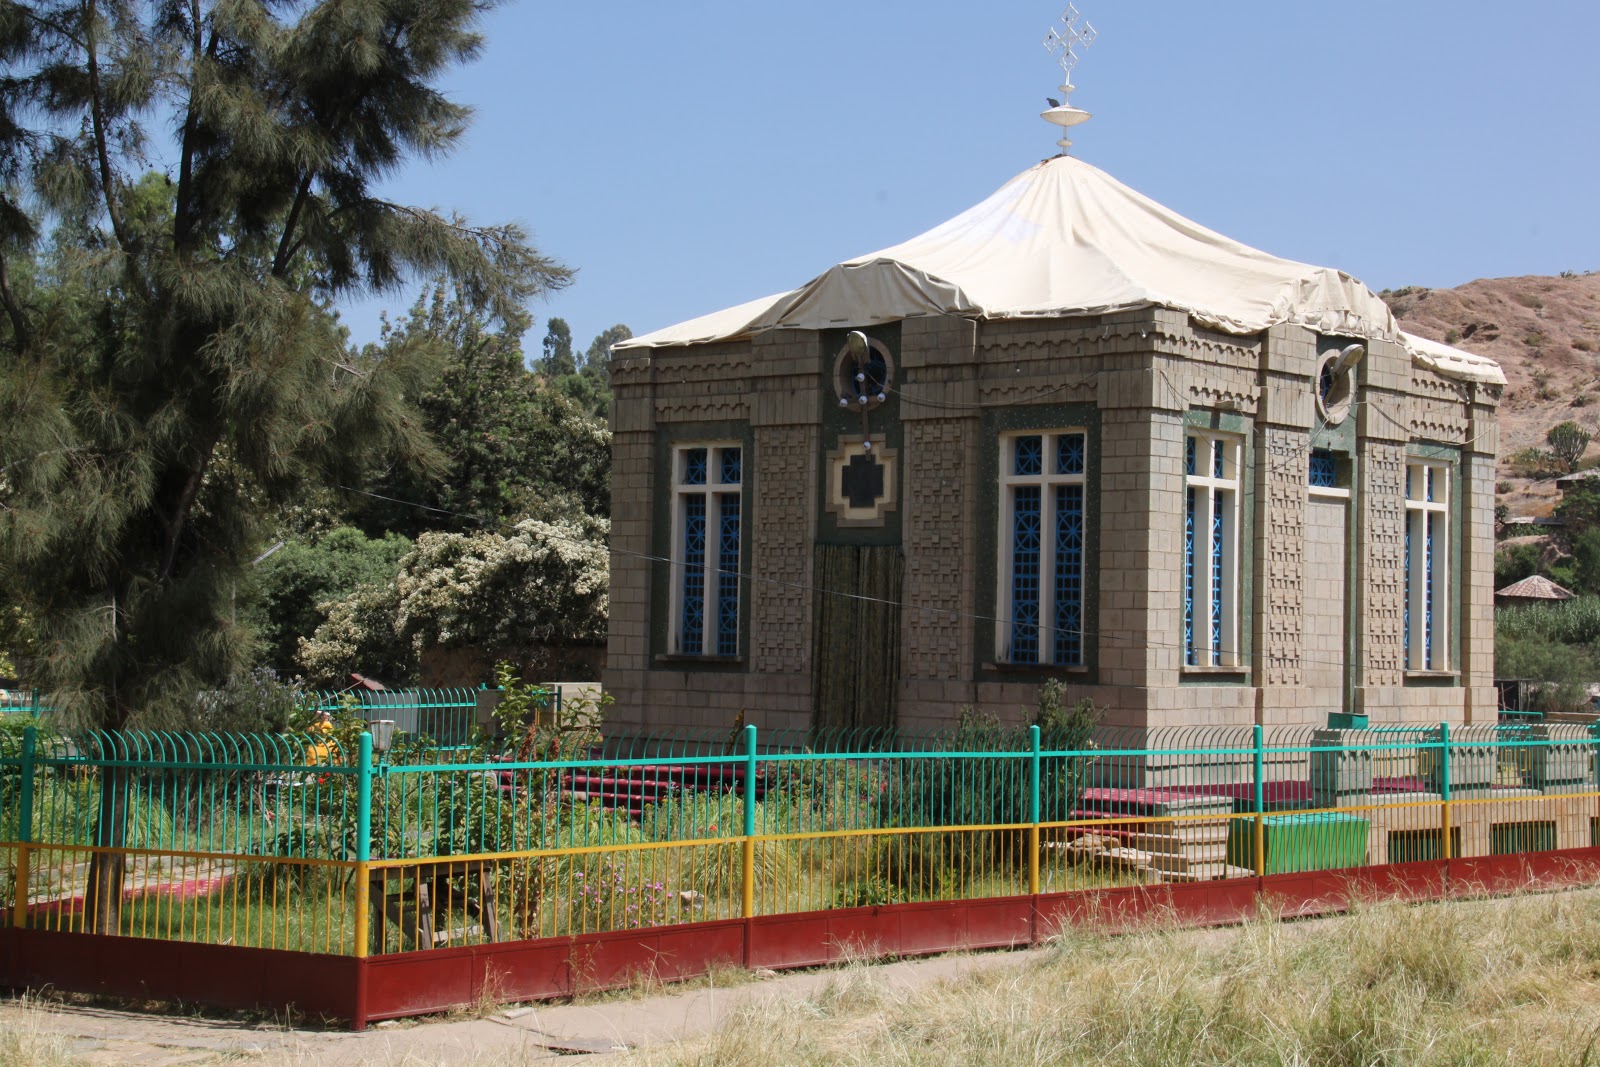 Ark of the Covenant, Ethiopia